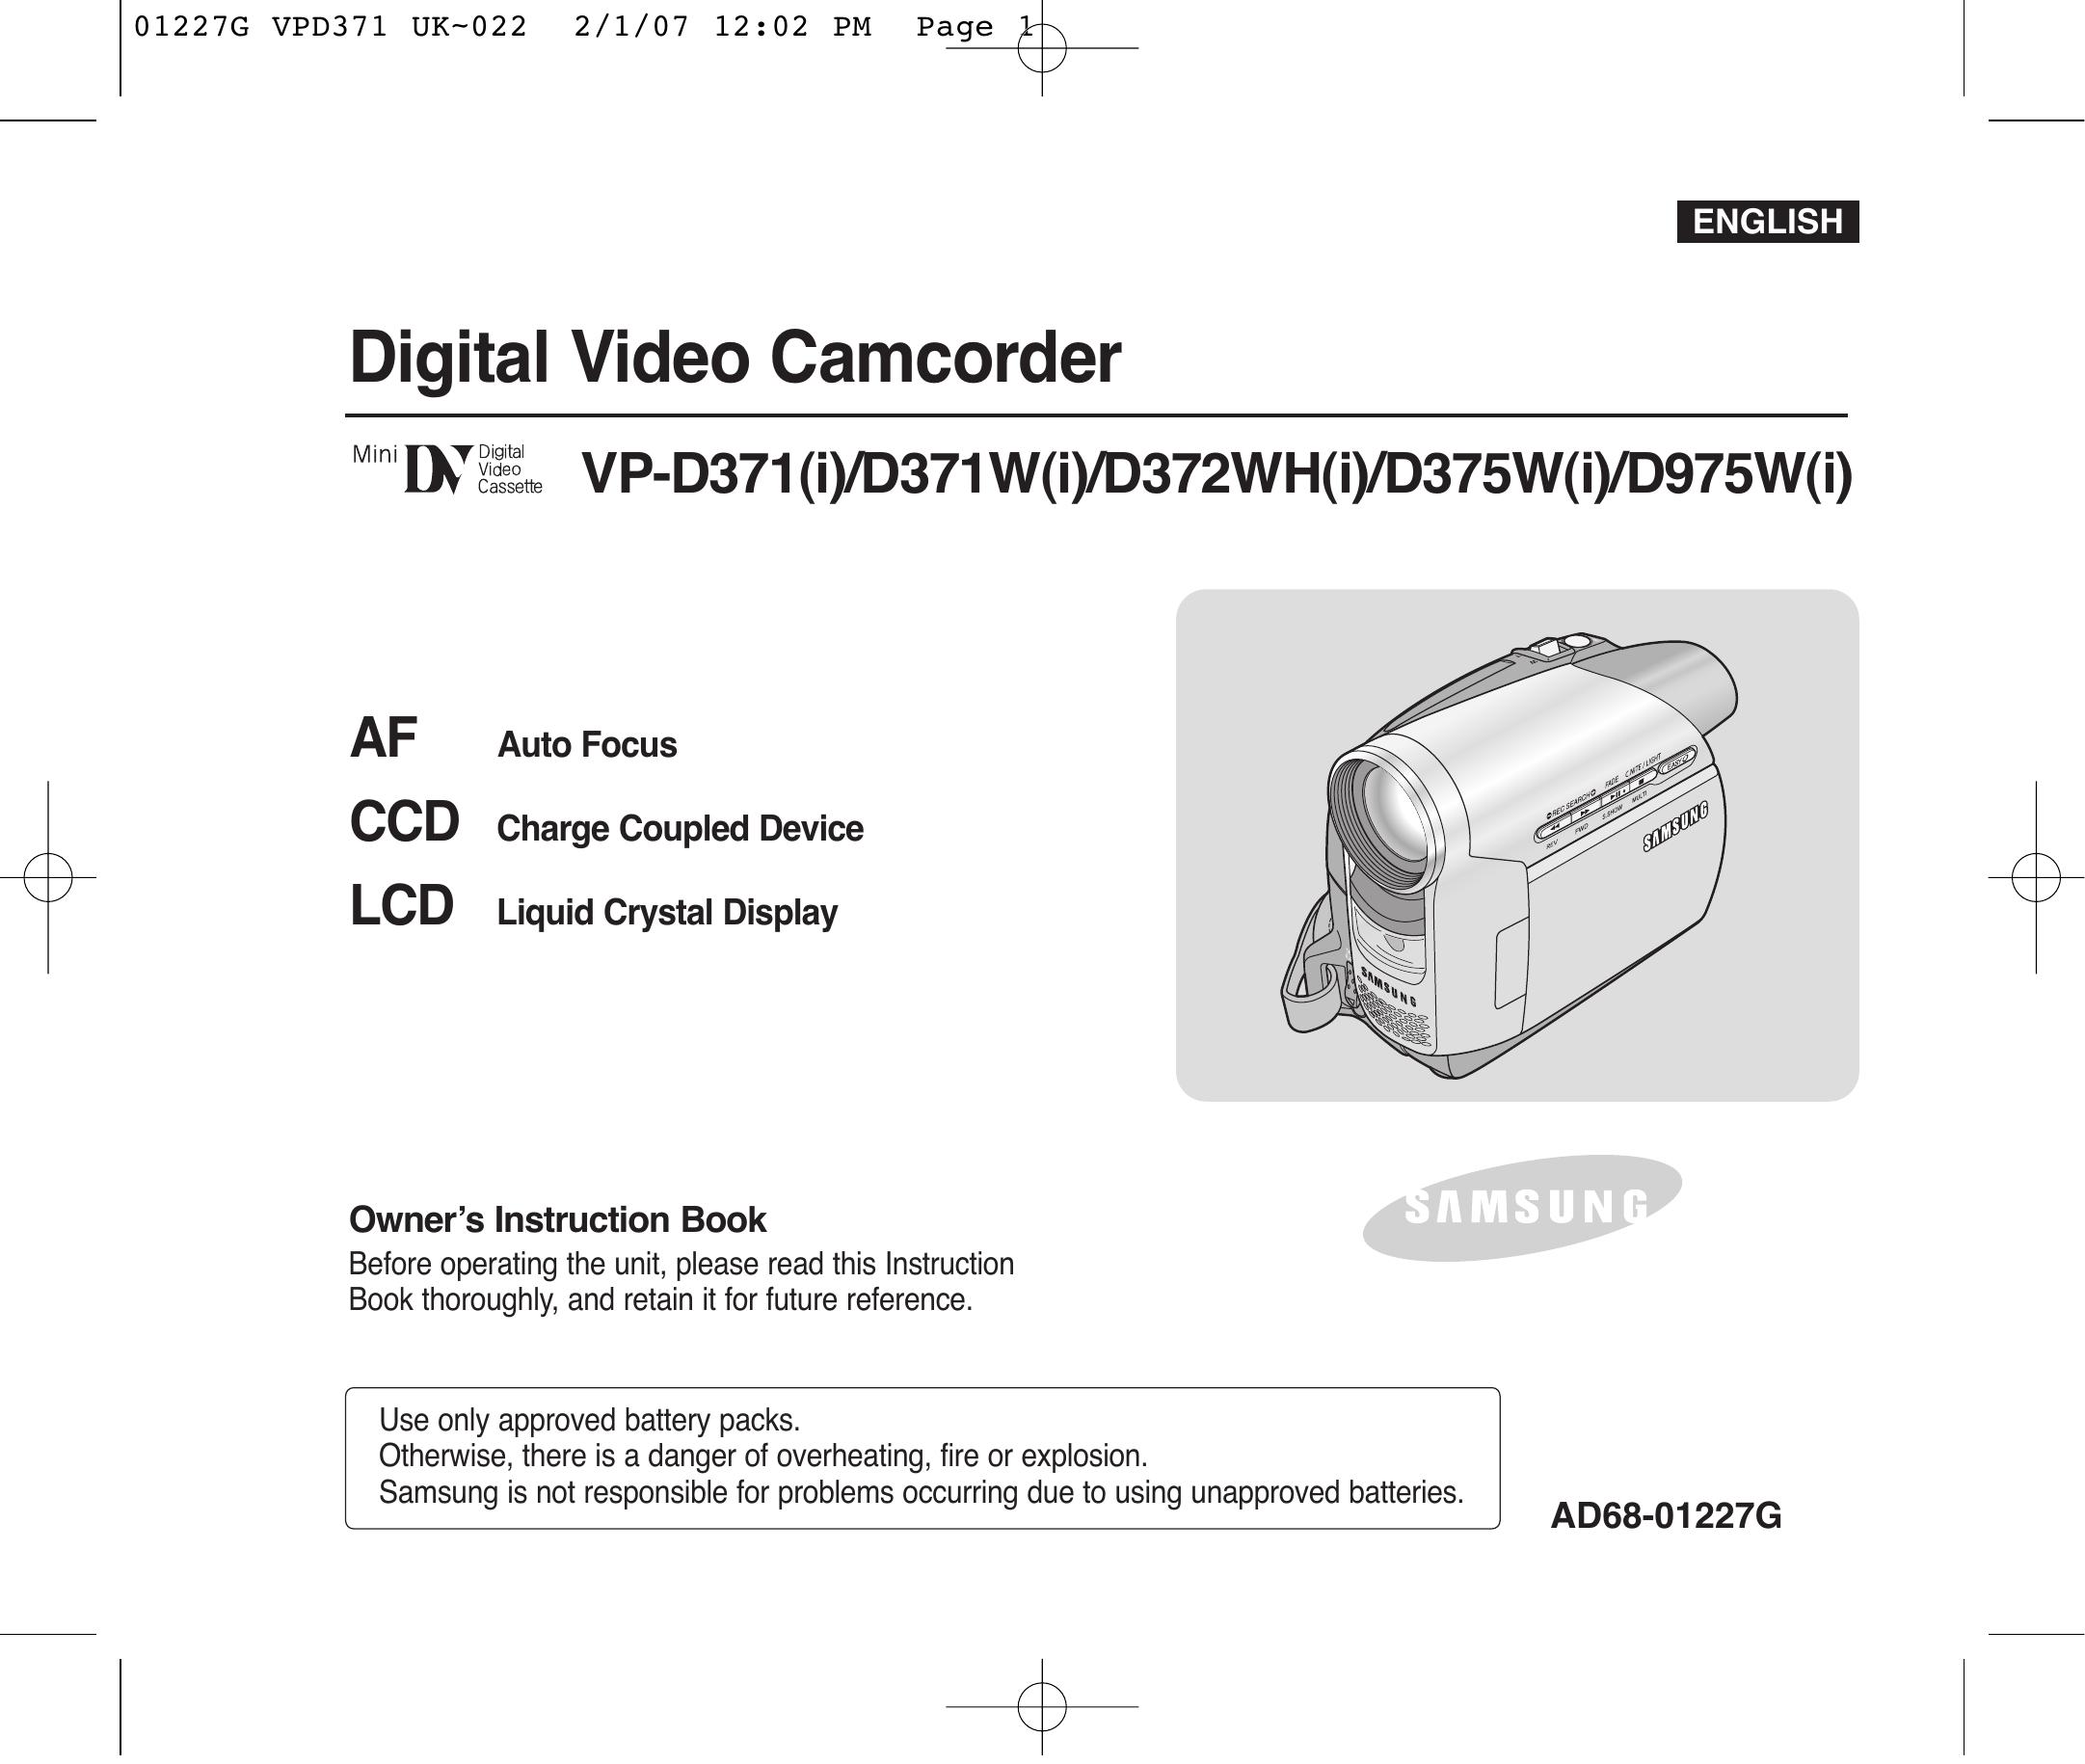 Samsung D975W(i) Camcorder User Manual